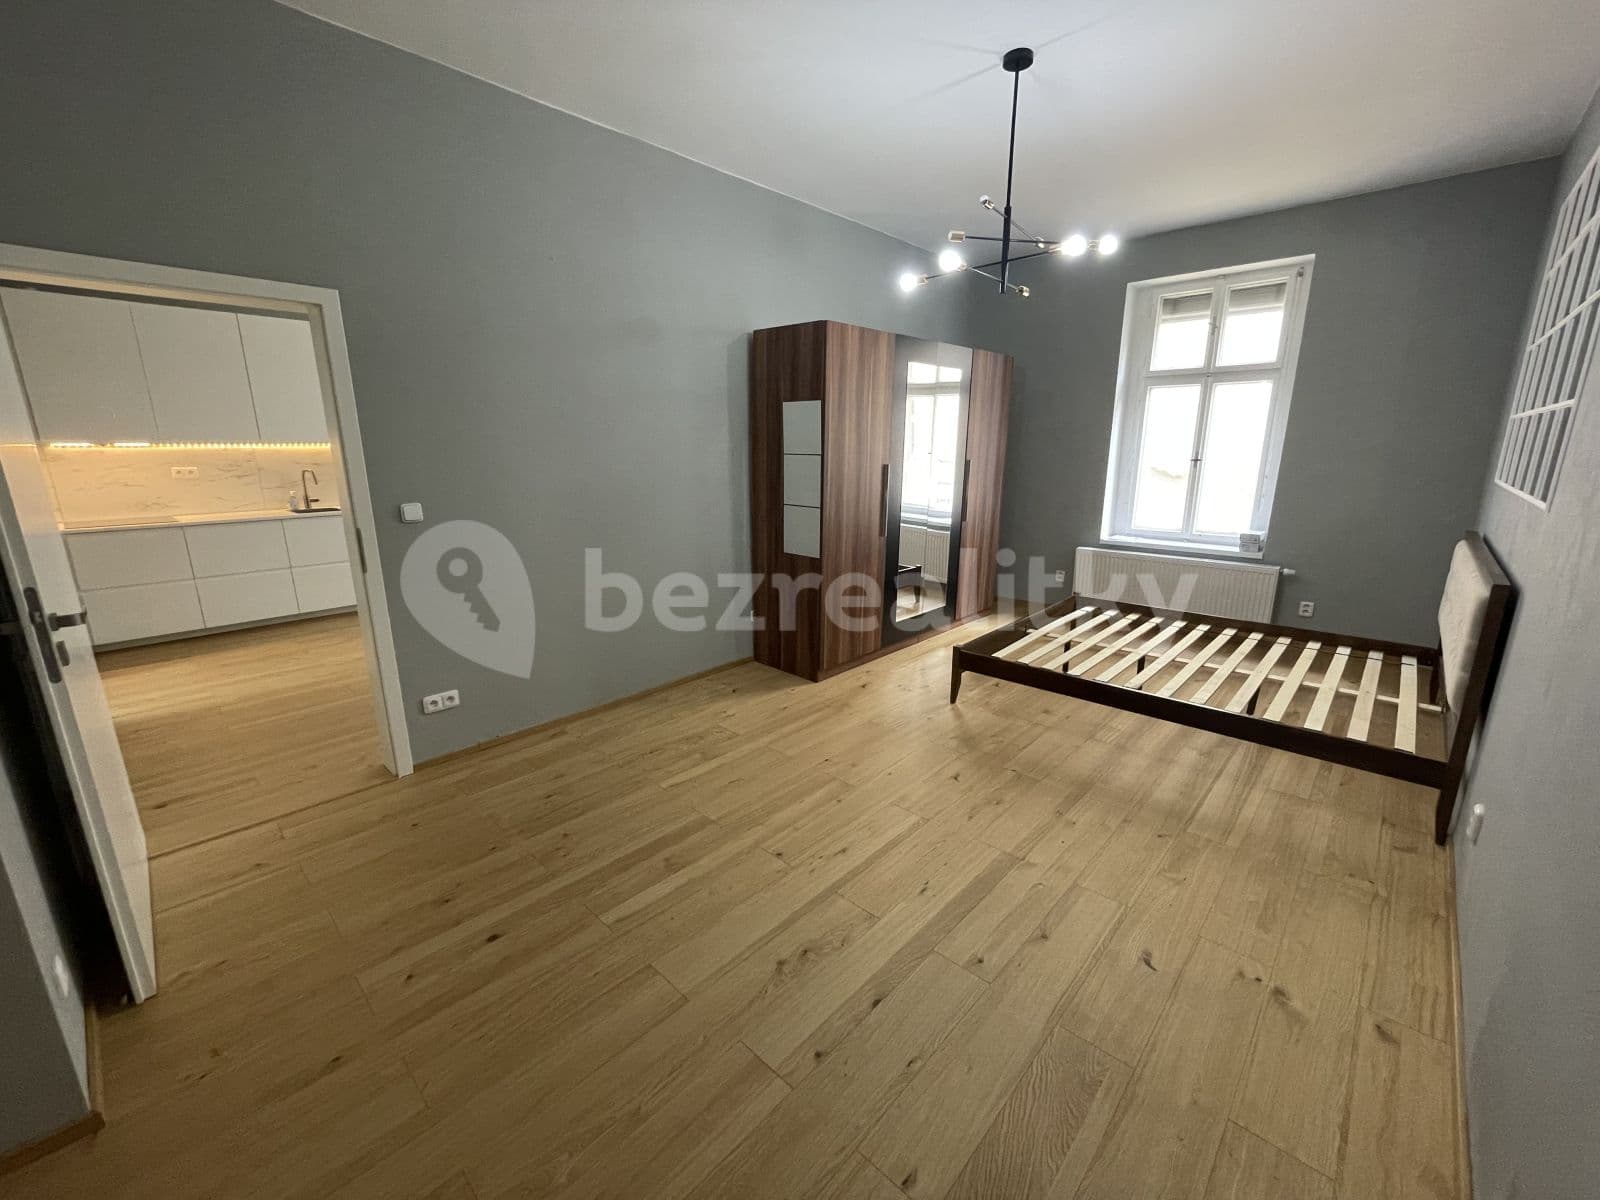 2 bedroom with open-plan kitchen flat to rent, 76 m², Pernerova, Prague, Prague